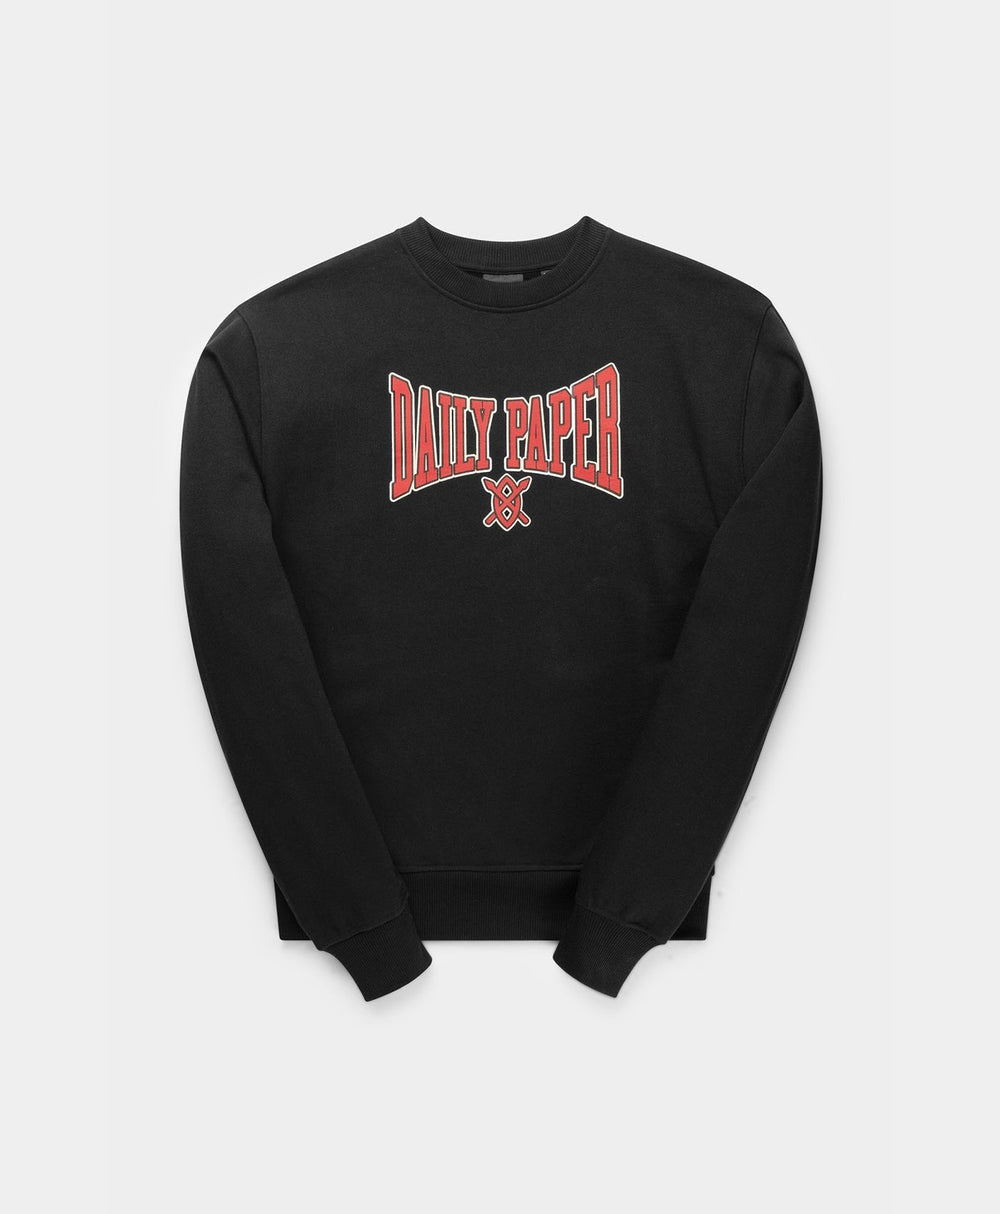 DP - Black Nirway Sweater - Packshot - Front